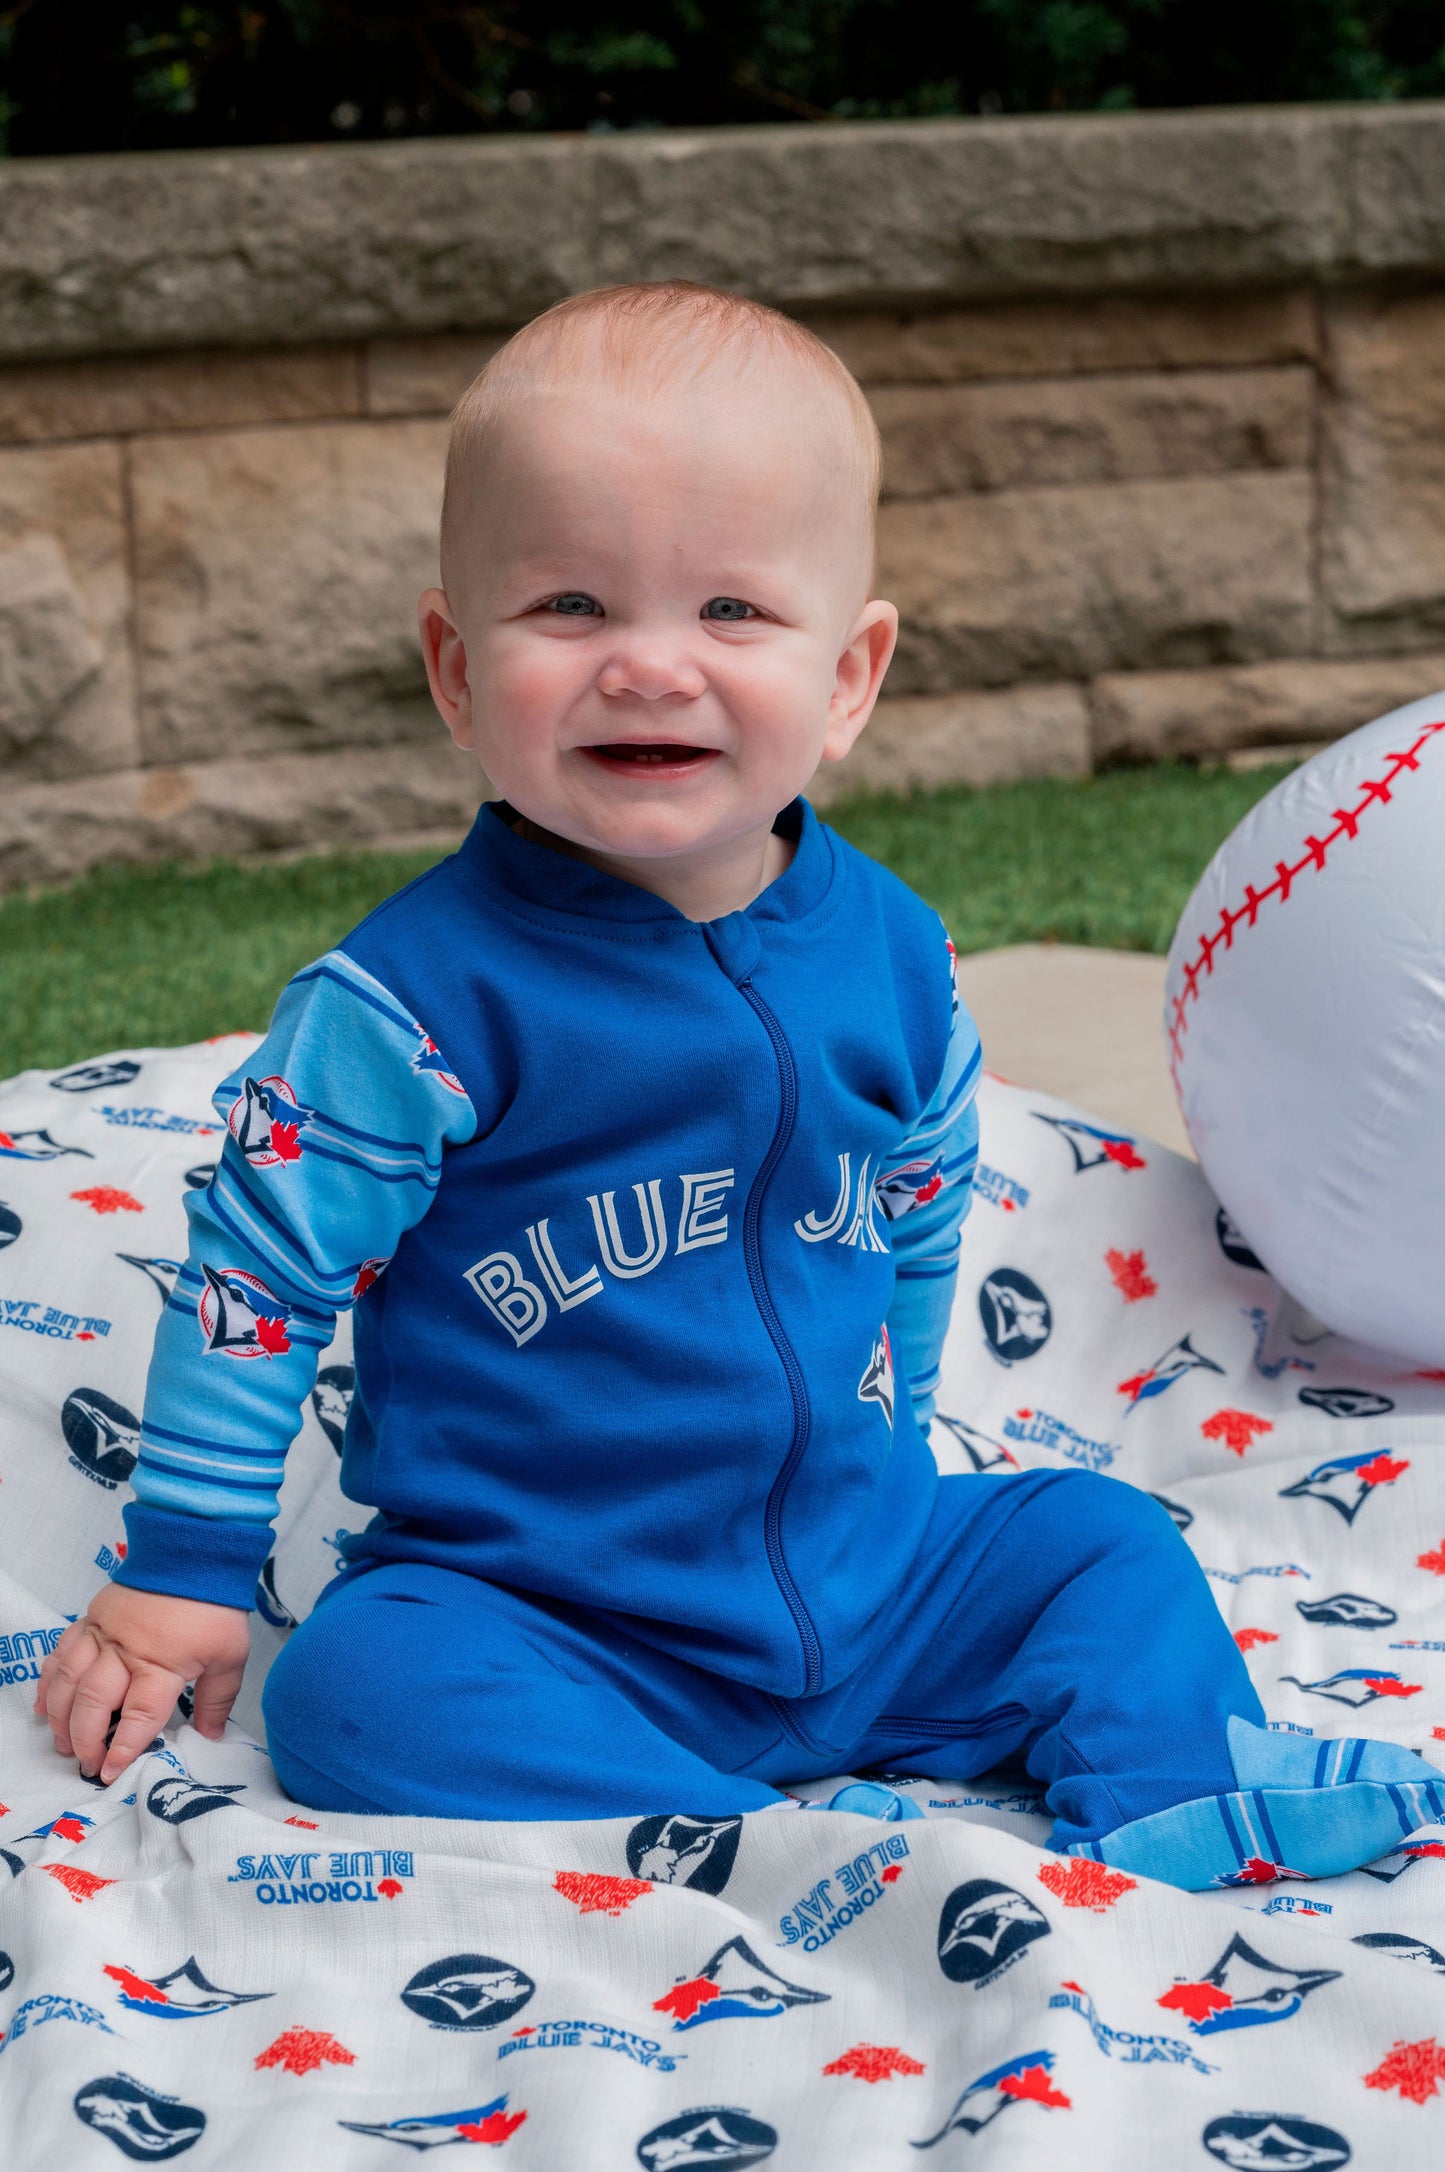 MLB Toronto Blue Jays Baby 5-Piece Layette Set